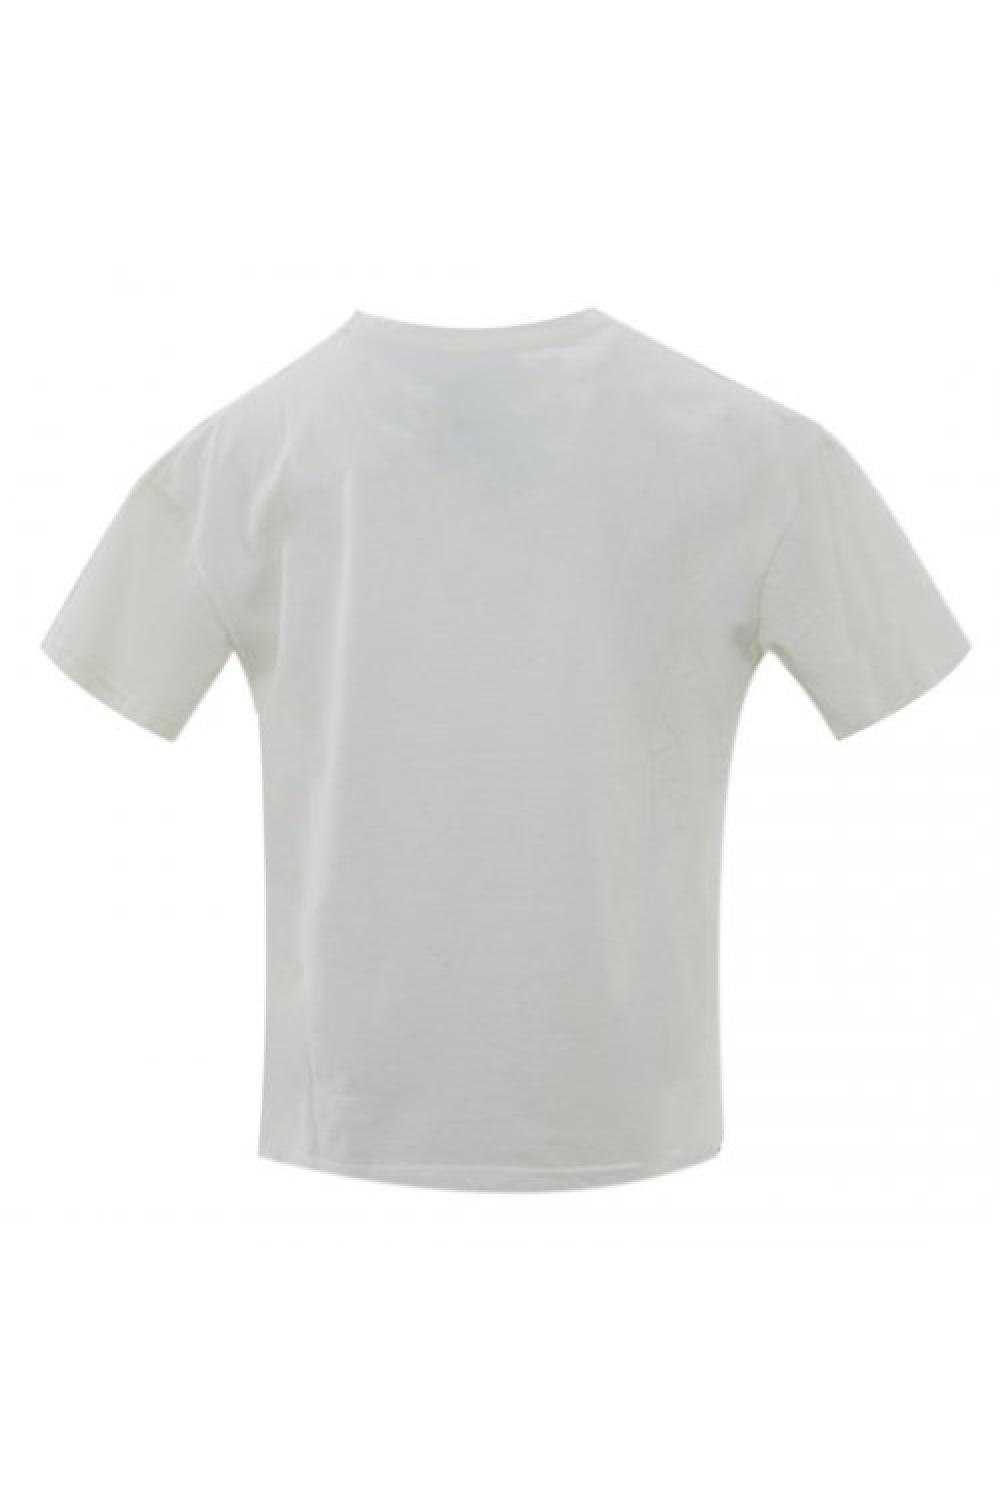 STAFF T-shirt Tessa Women - White (63-013.047-N0010)